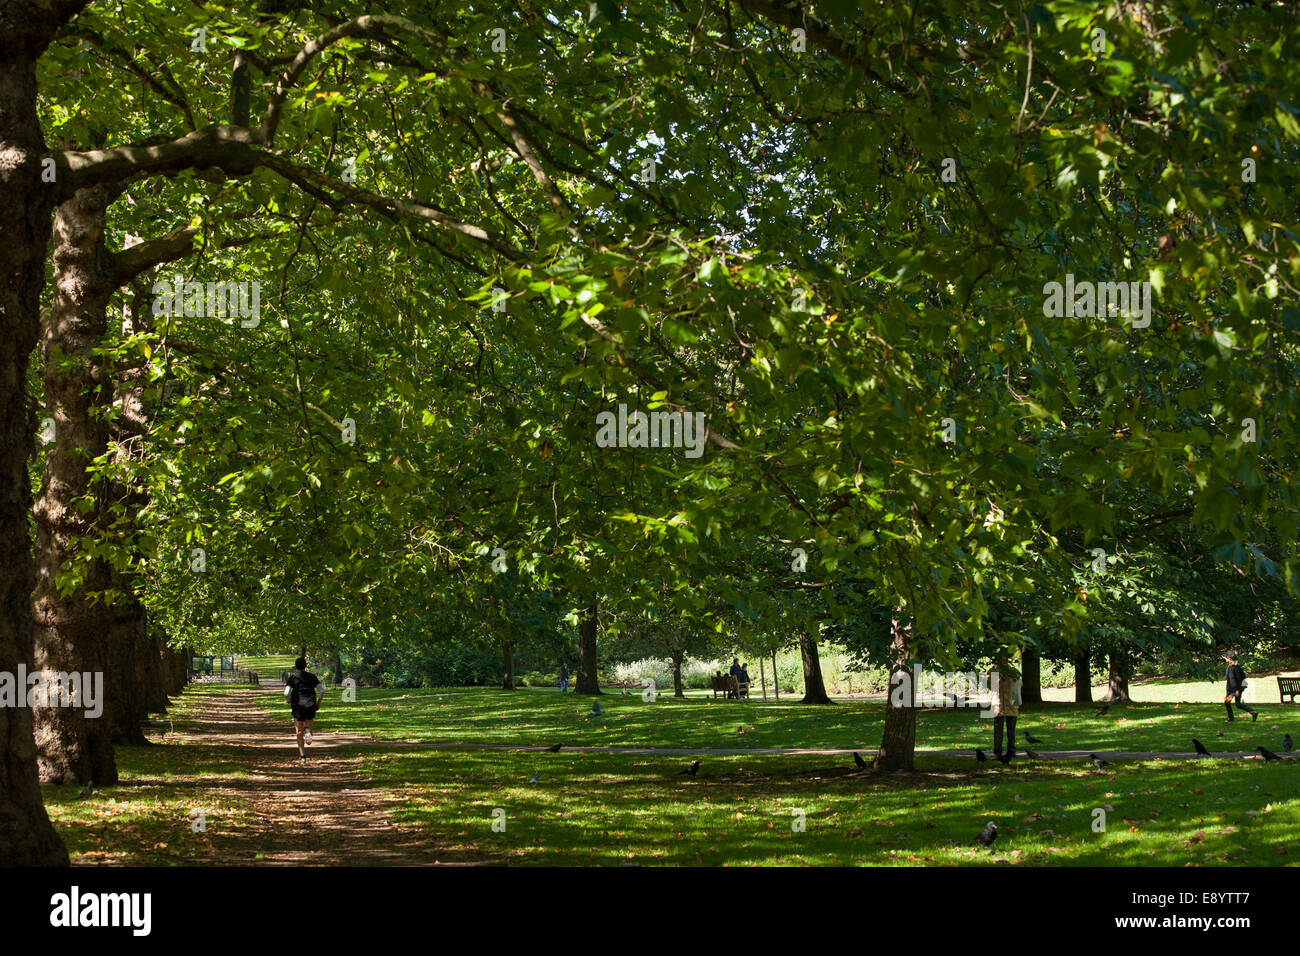 Hombre Footing bajo un dosel de hojas de árboles que bordean a pie de jaula de perico, St James's Park, Londres, Inglaterra Foto de stock